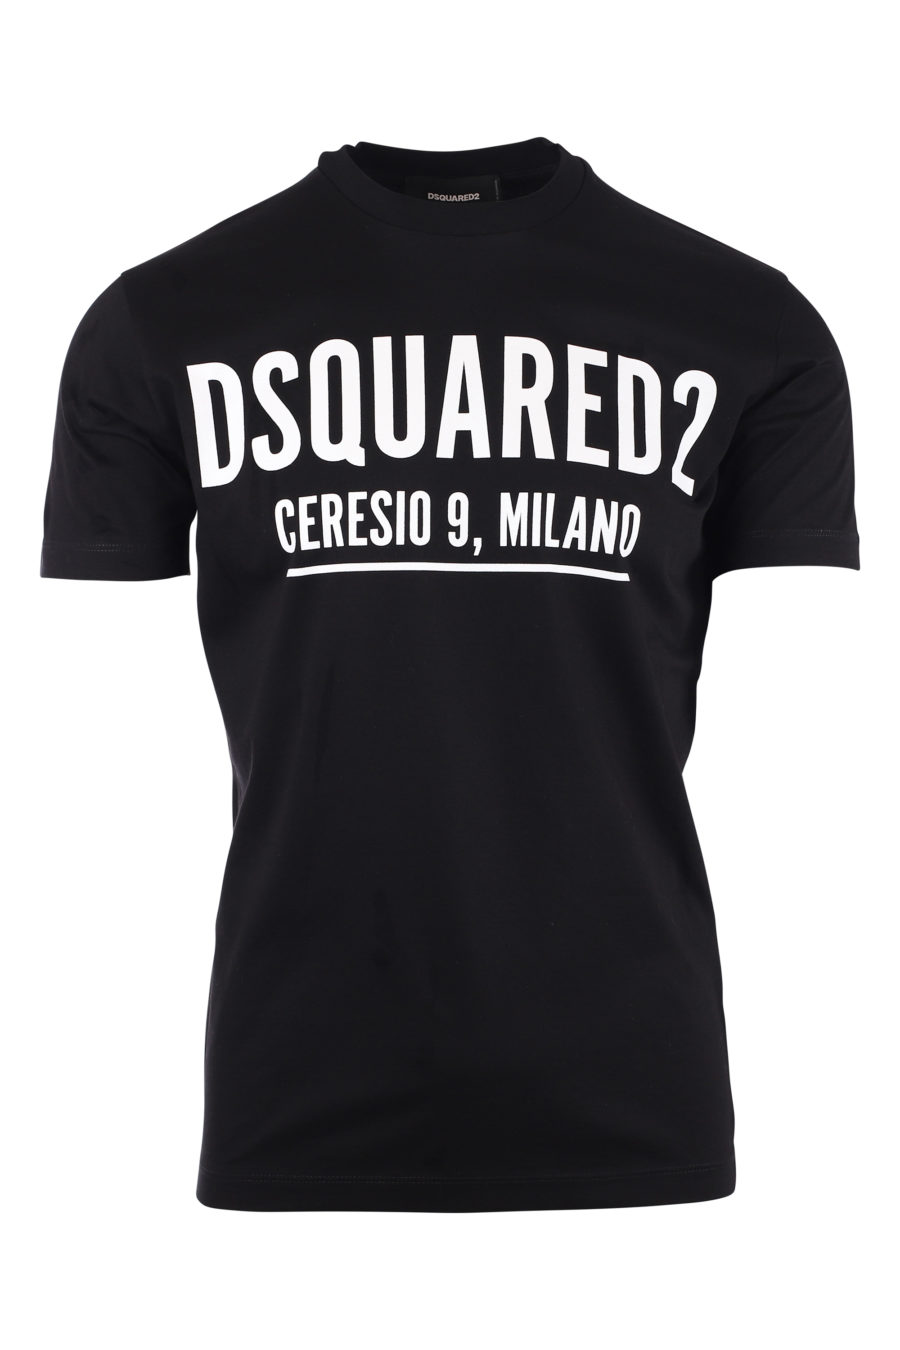 T-shirt preta com logótipo ceresio 9 - IMG 9726